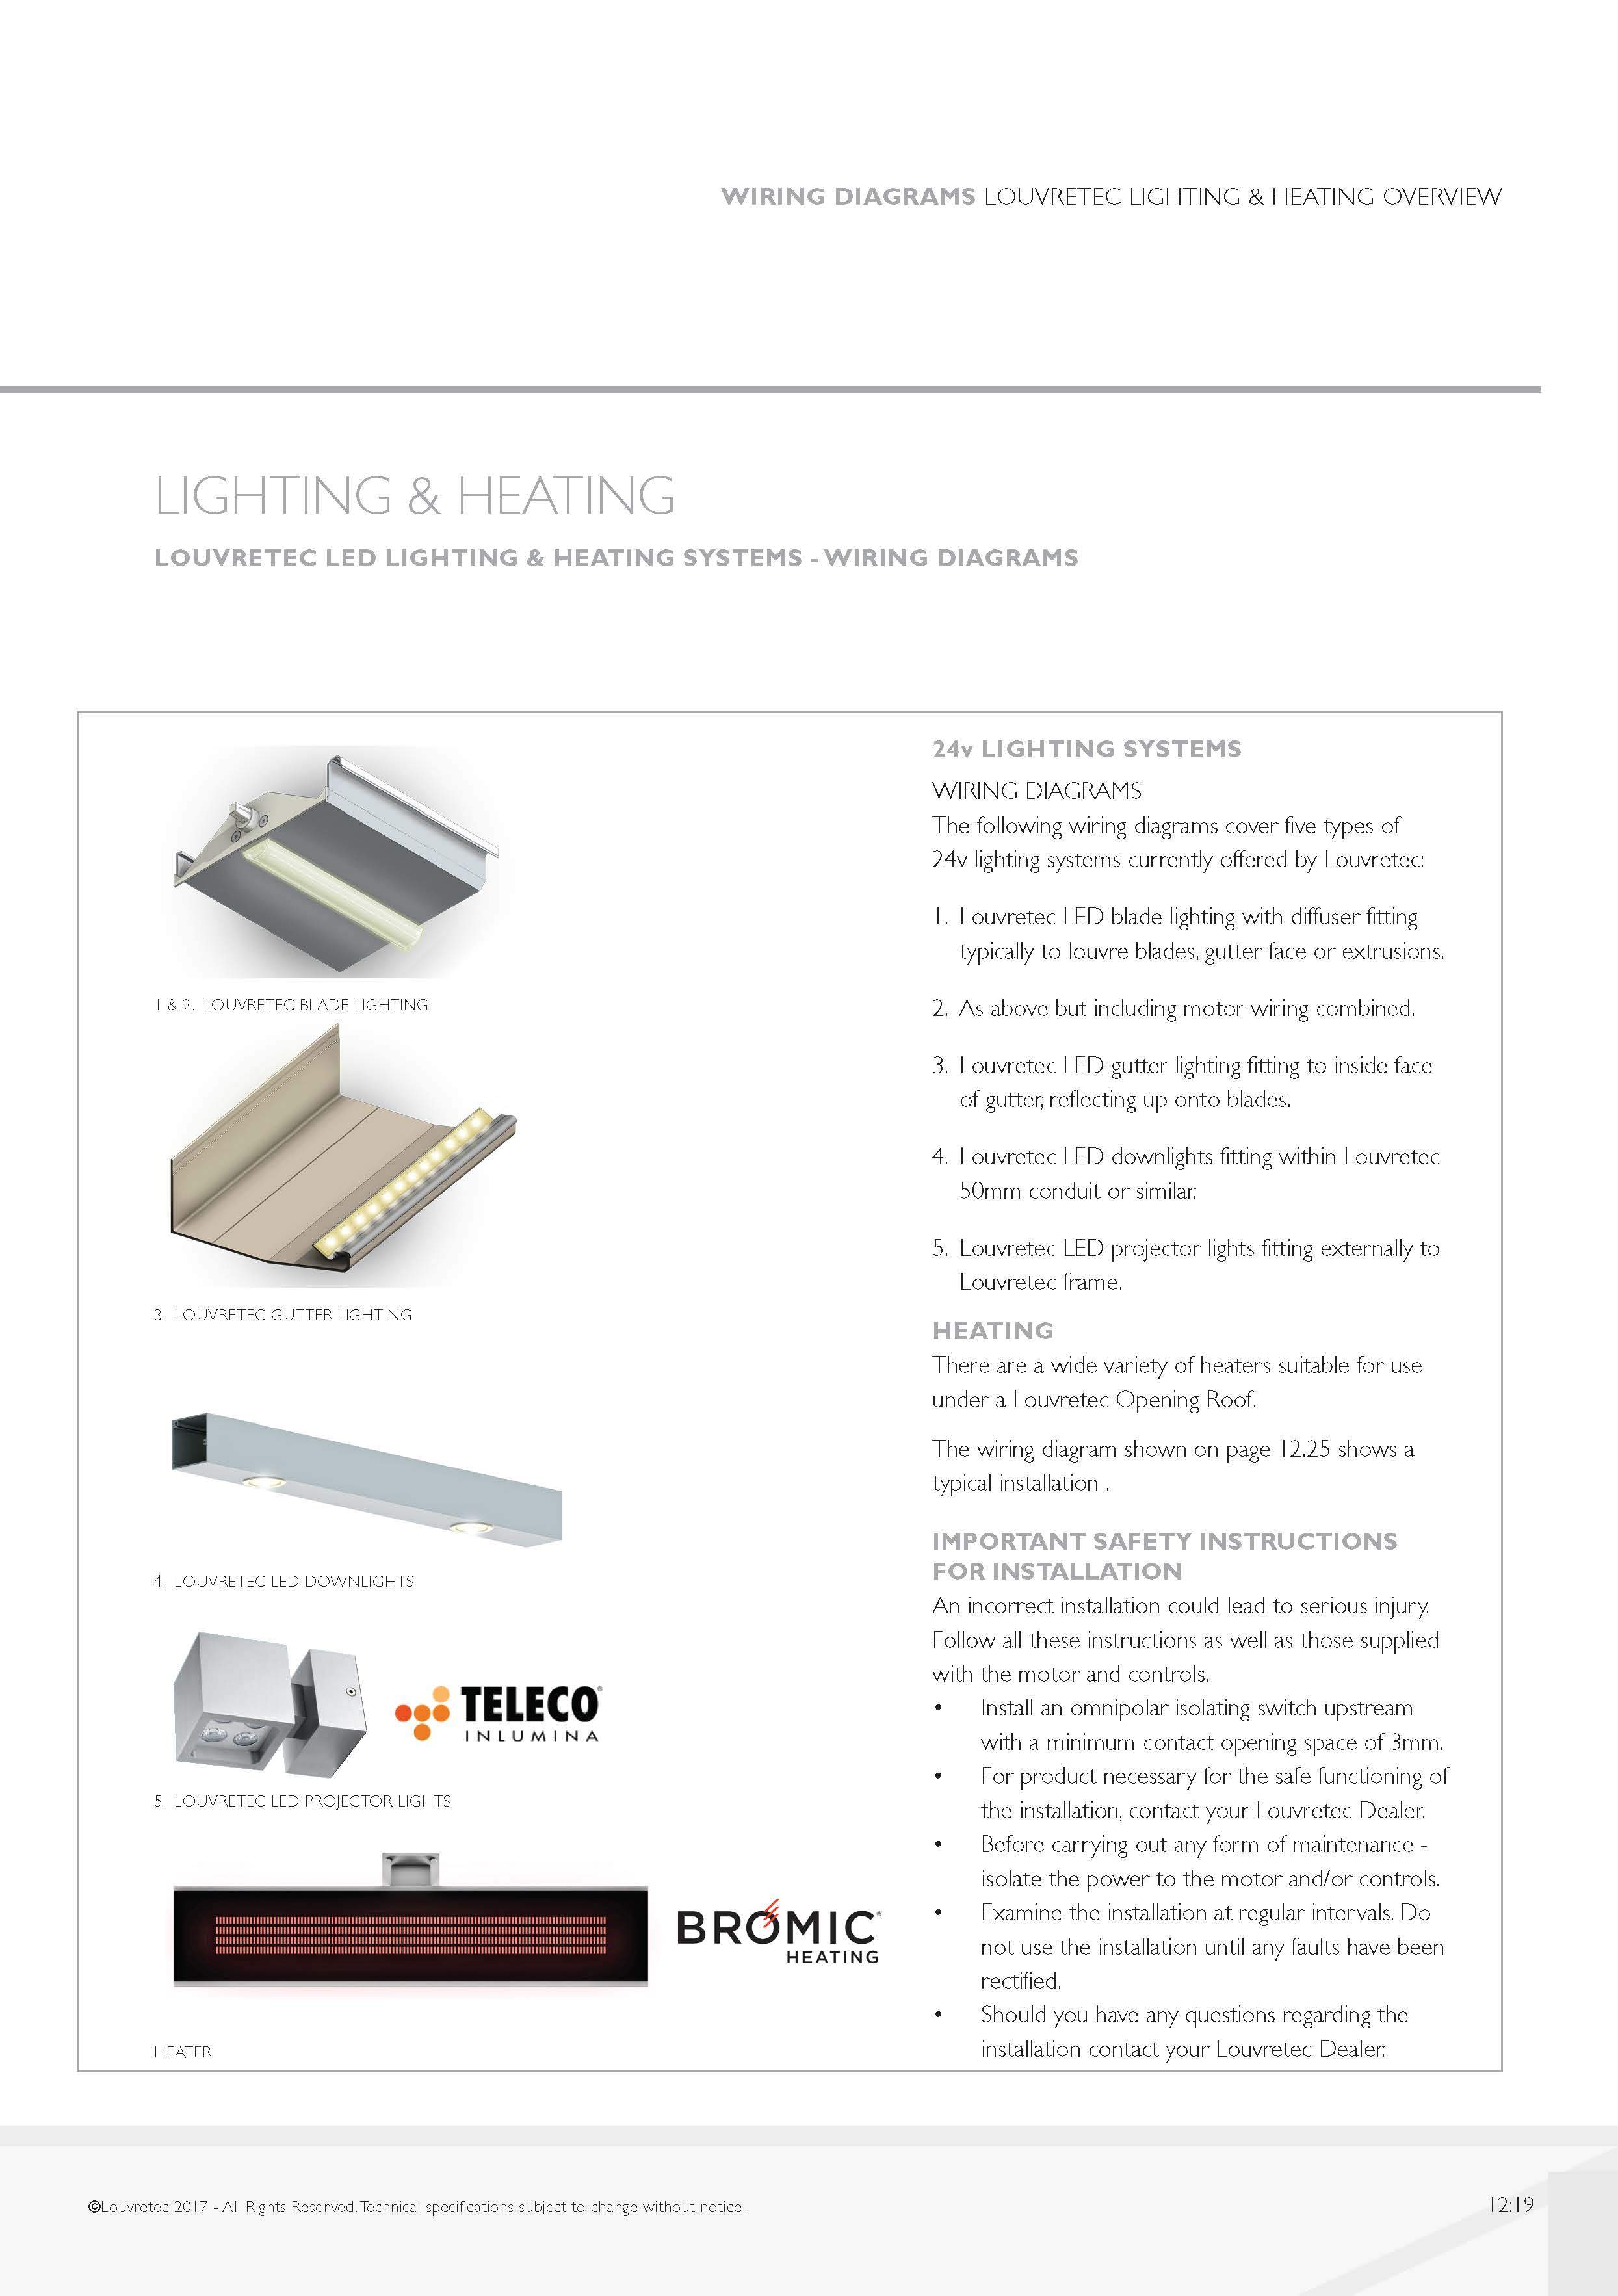 Lighting & Heatin Overview | 12.19